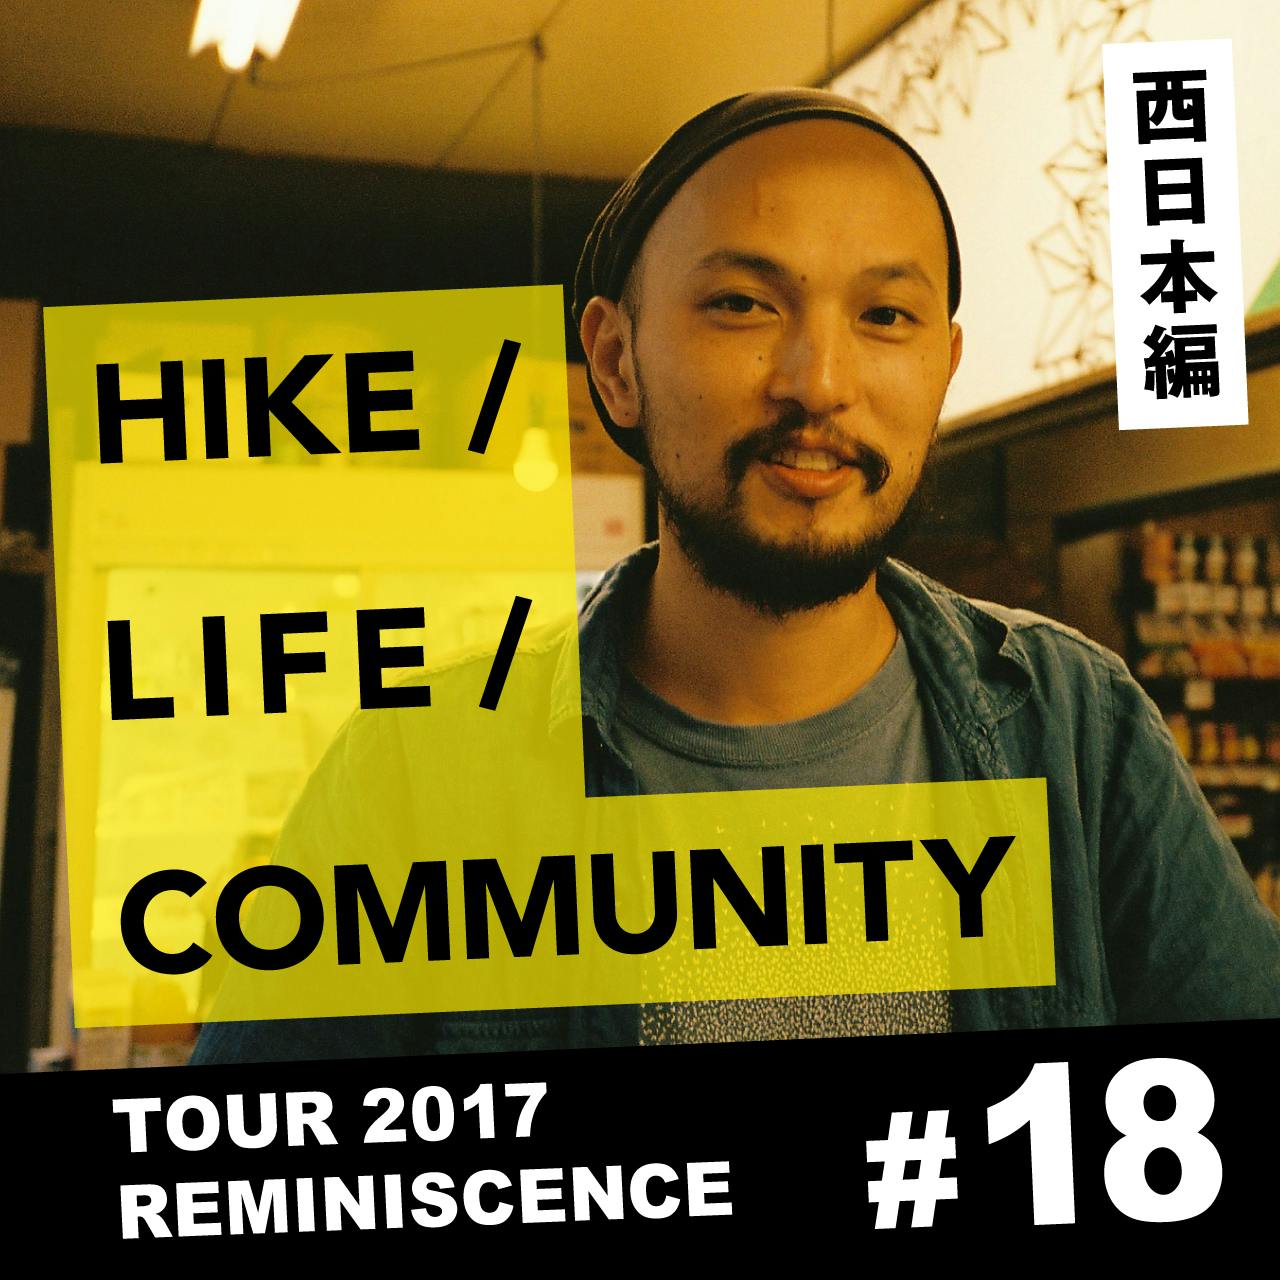 HIKE / LIFE / COMMUNITY TOUR 2017 REMINISCENCE #18 近藤英和